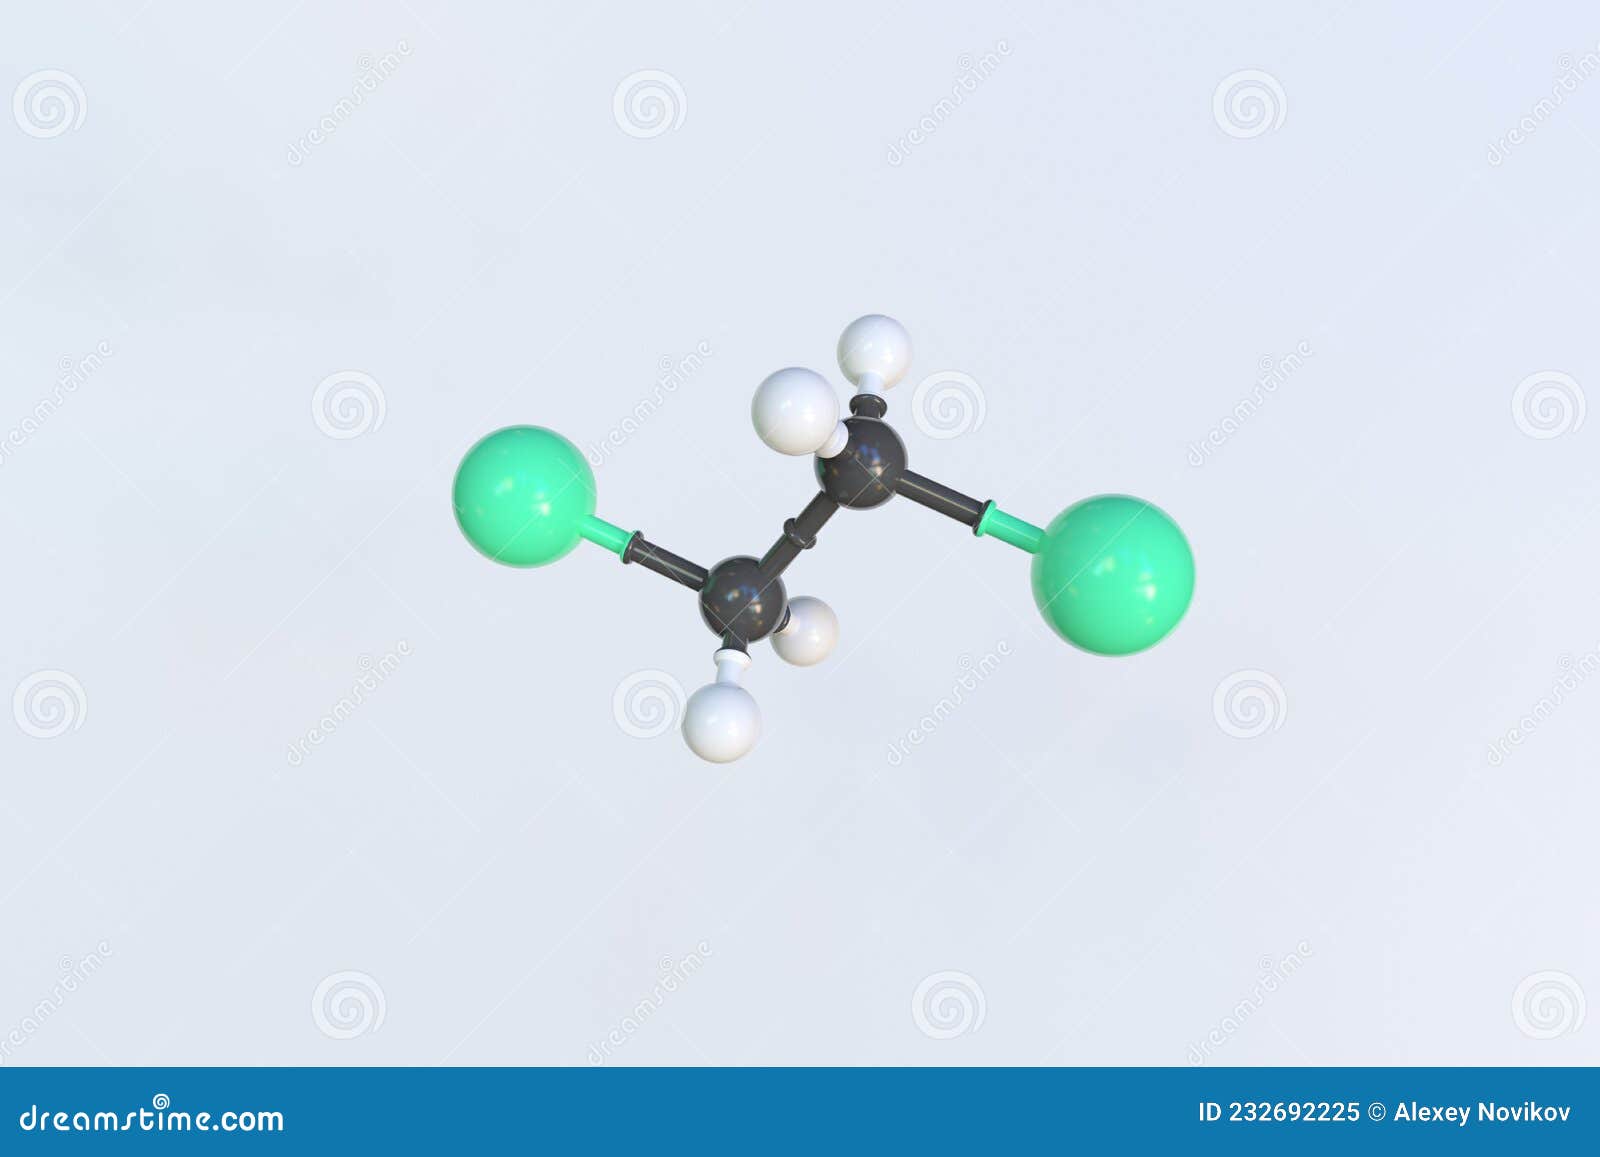 1,2-dibromoethane Molecule. Isolated Molecular Model. 3D Rendering ...